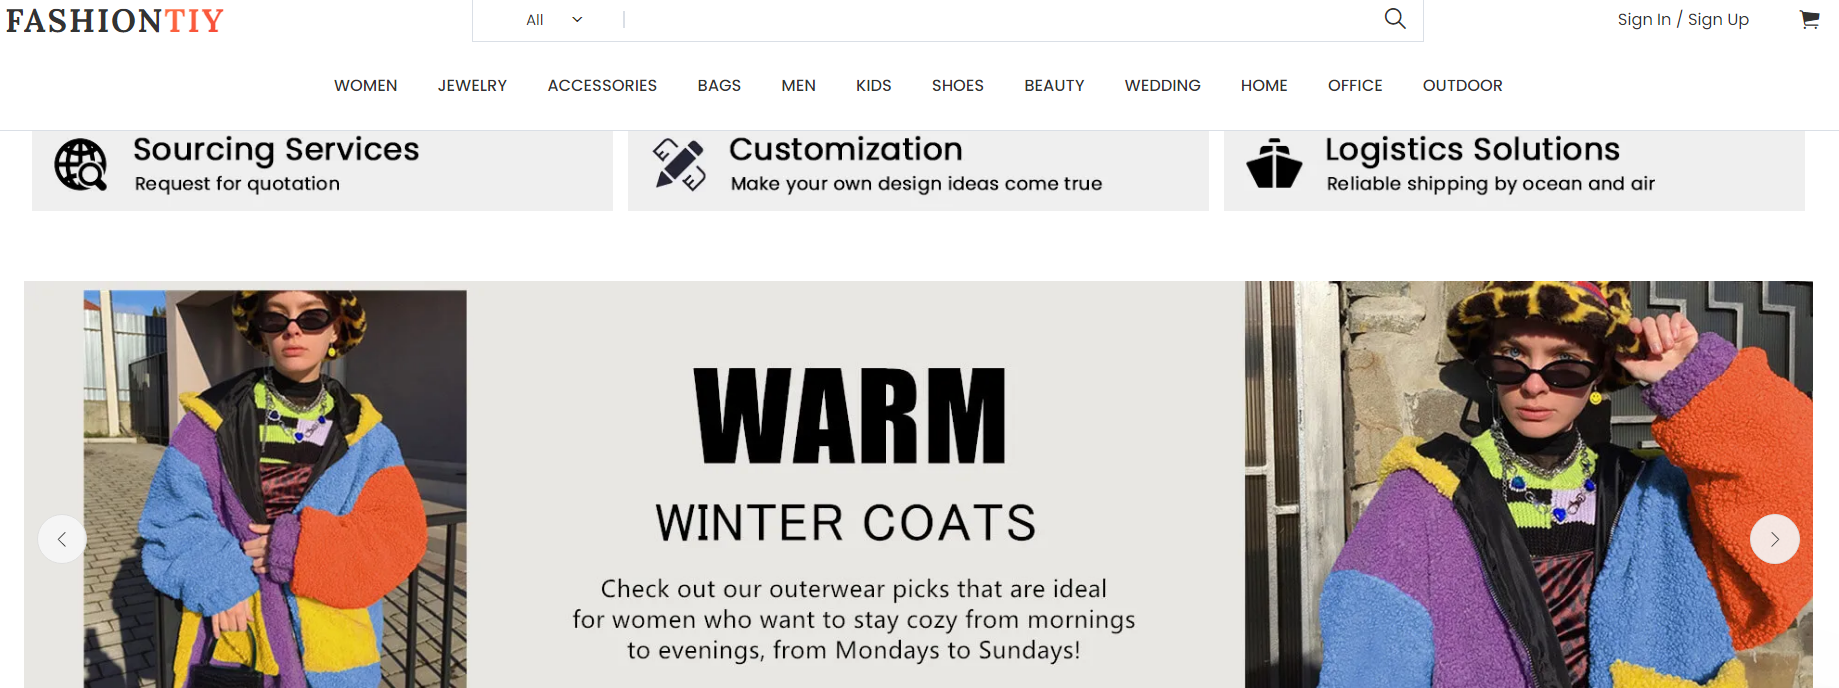 homepage of a wholesale clothing marketplace - FashionTIY